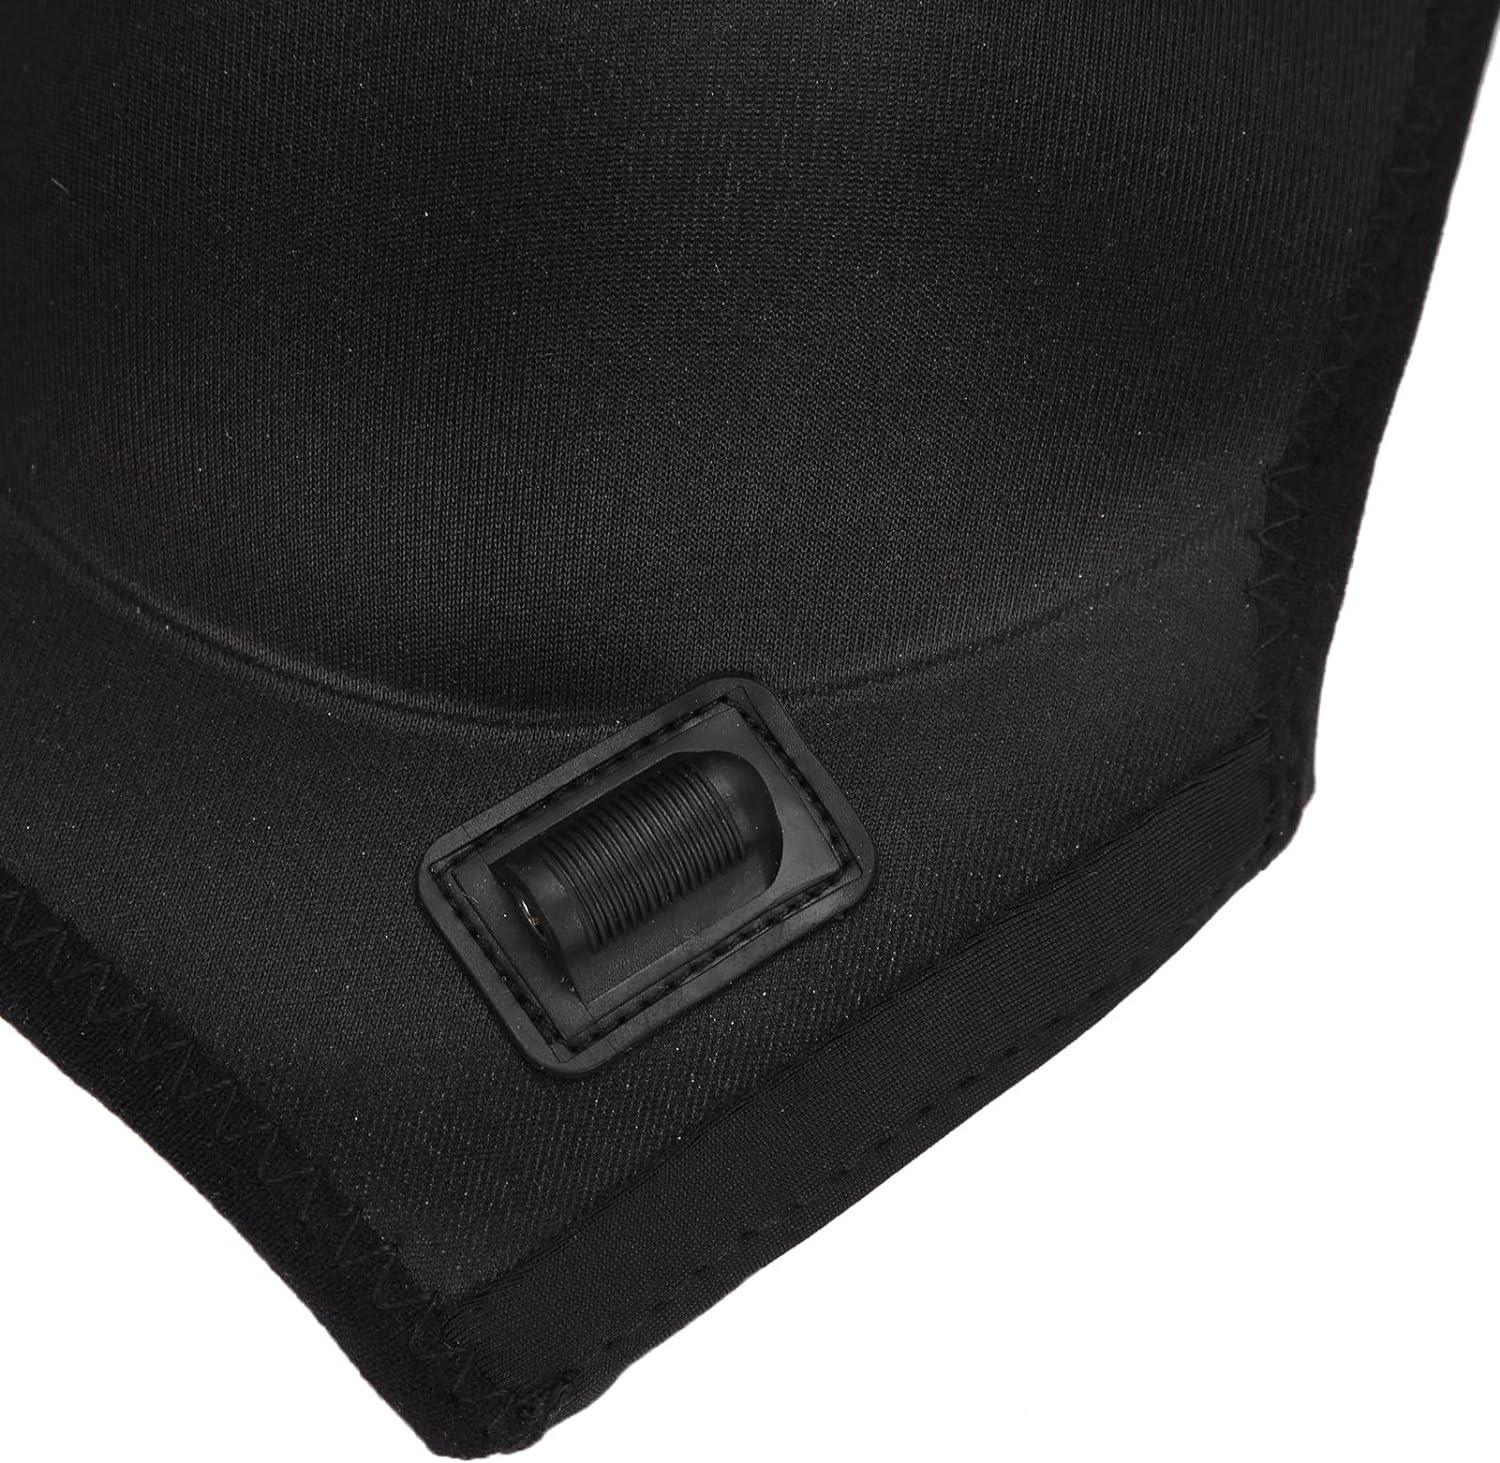 Underwear Electric Massage Bra Heating Wireless Breast Bra USB Black New